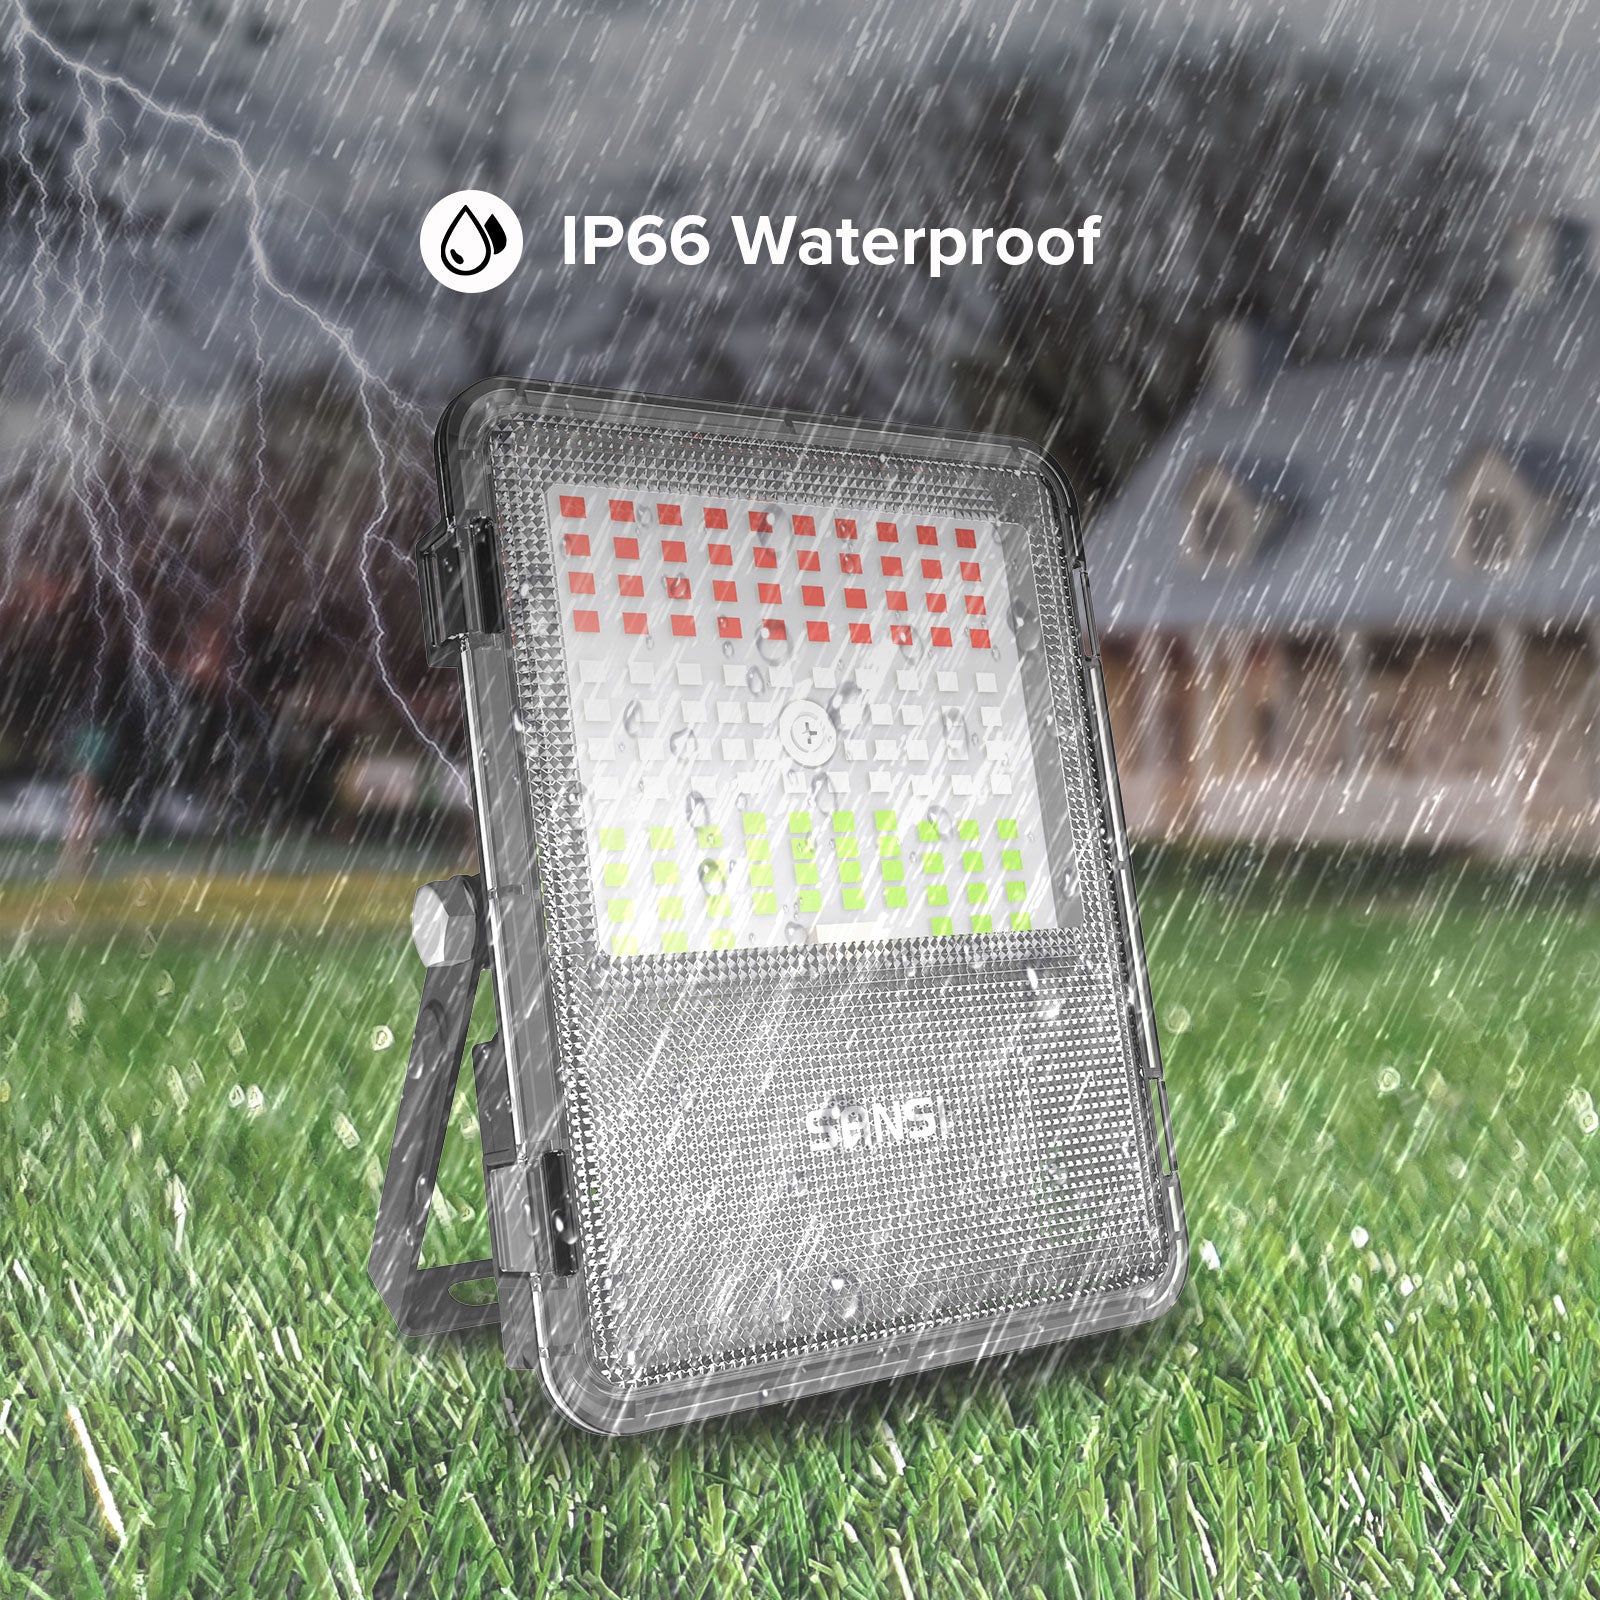 120W RGB Led Flood Light (US ONLY) is IP66 Waterproof.